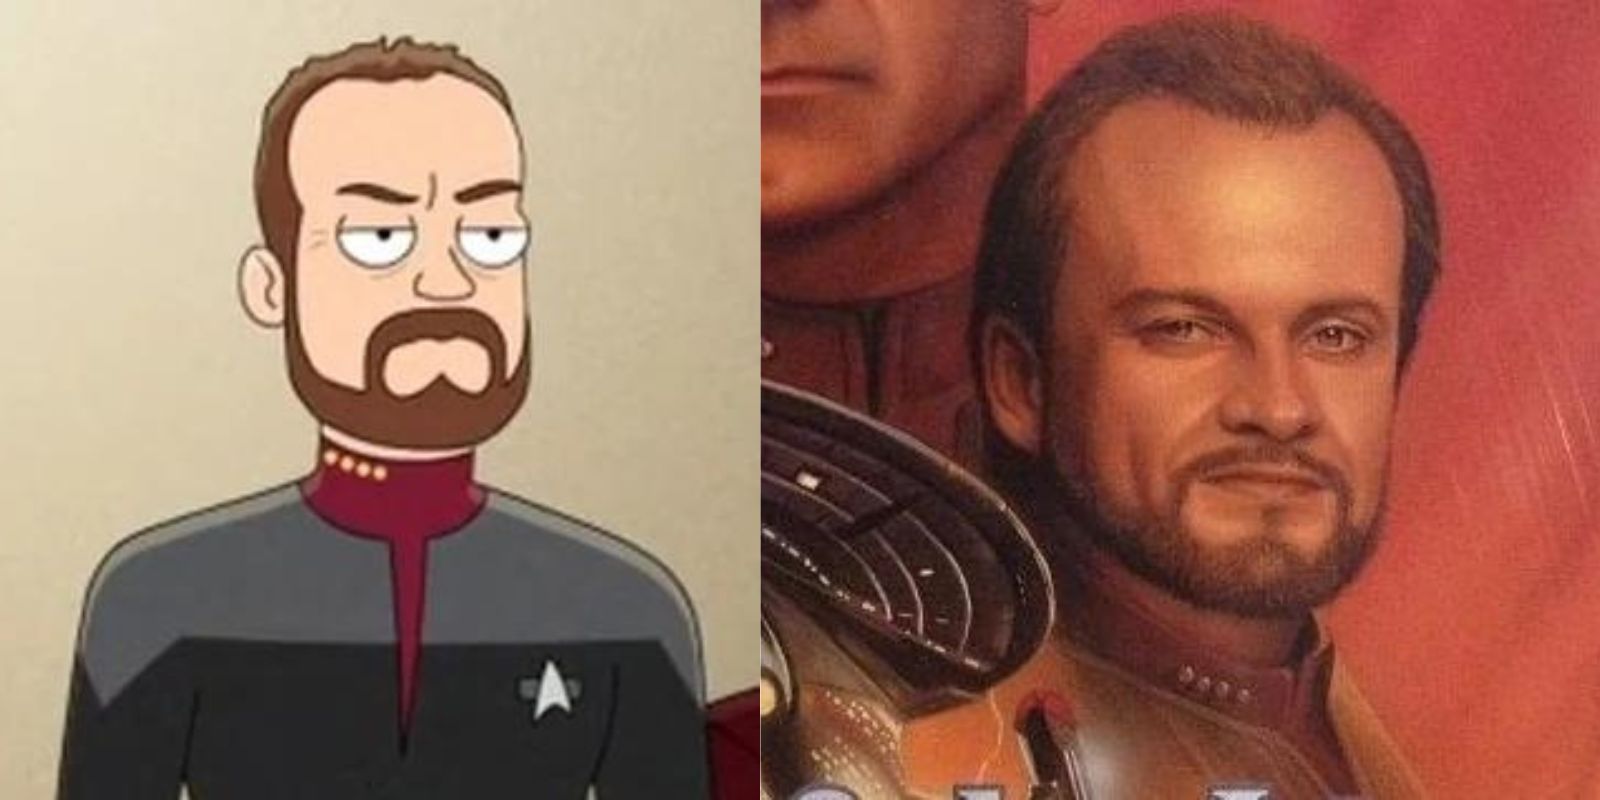 Morgan Bateson Star Trek Collage